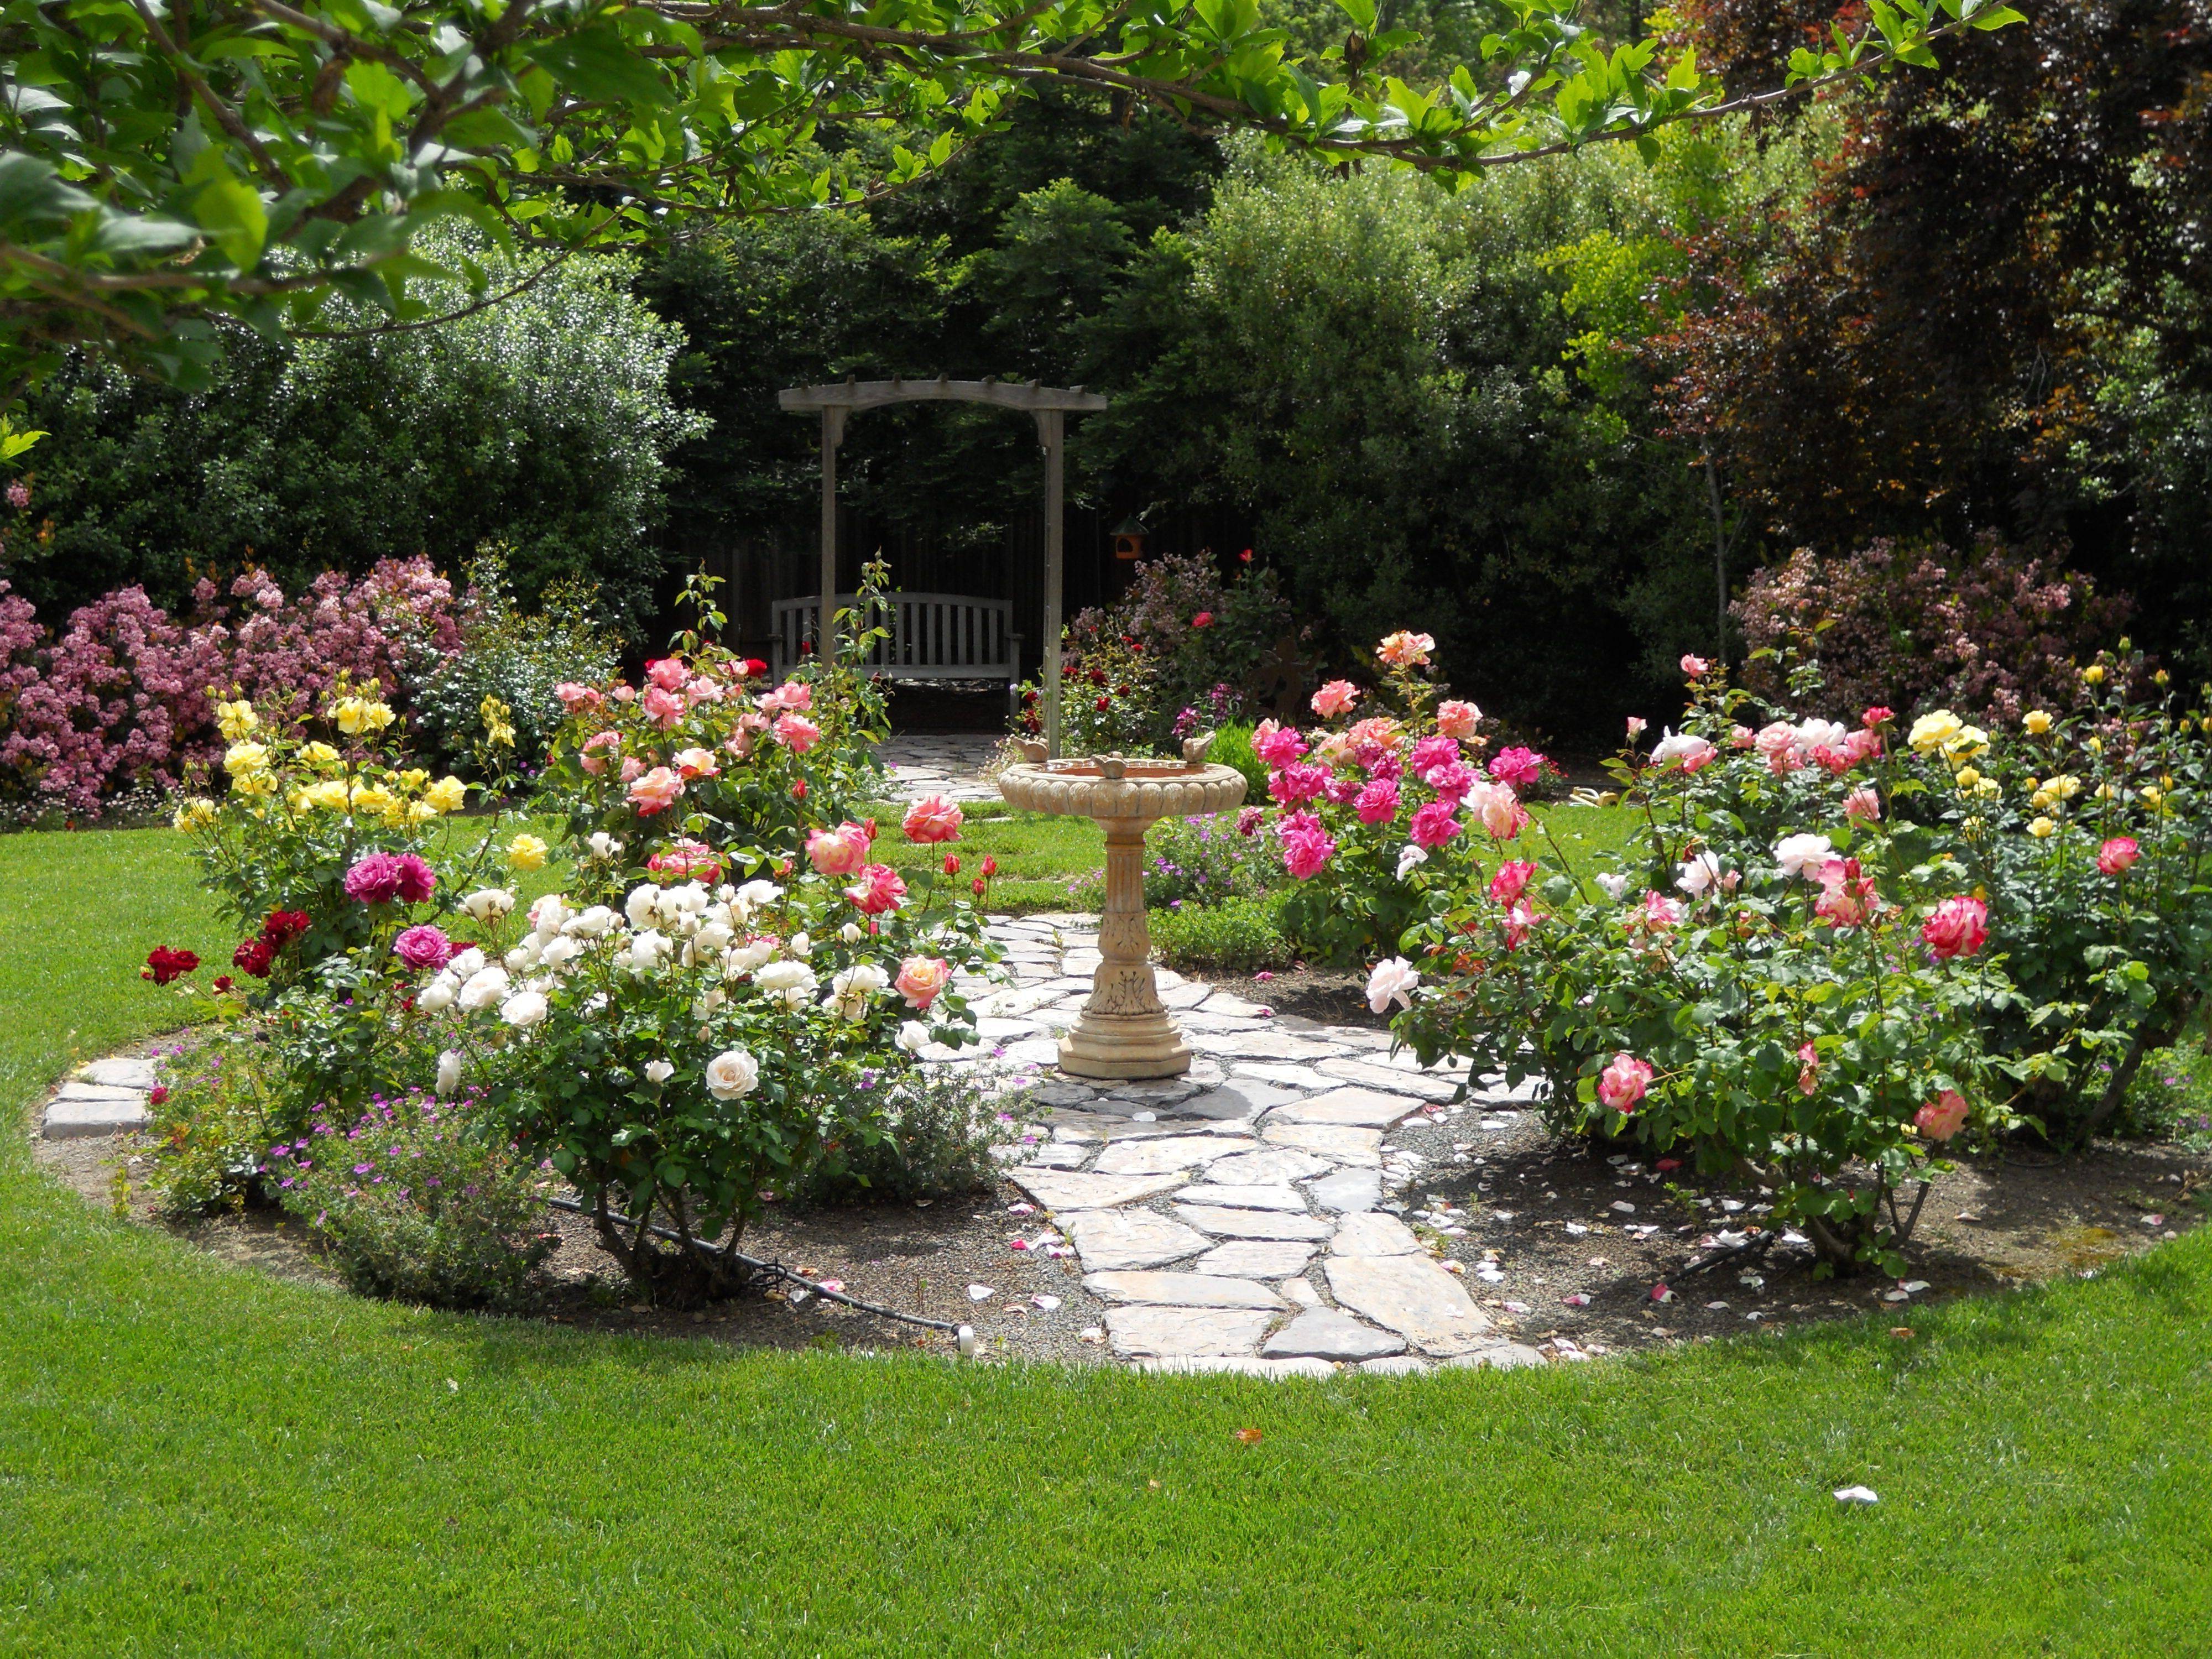 Beautiful Traditional Rose Garden Patio Best Patio Design Ideas